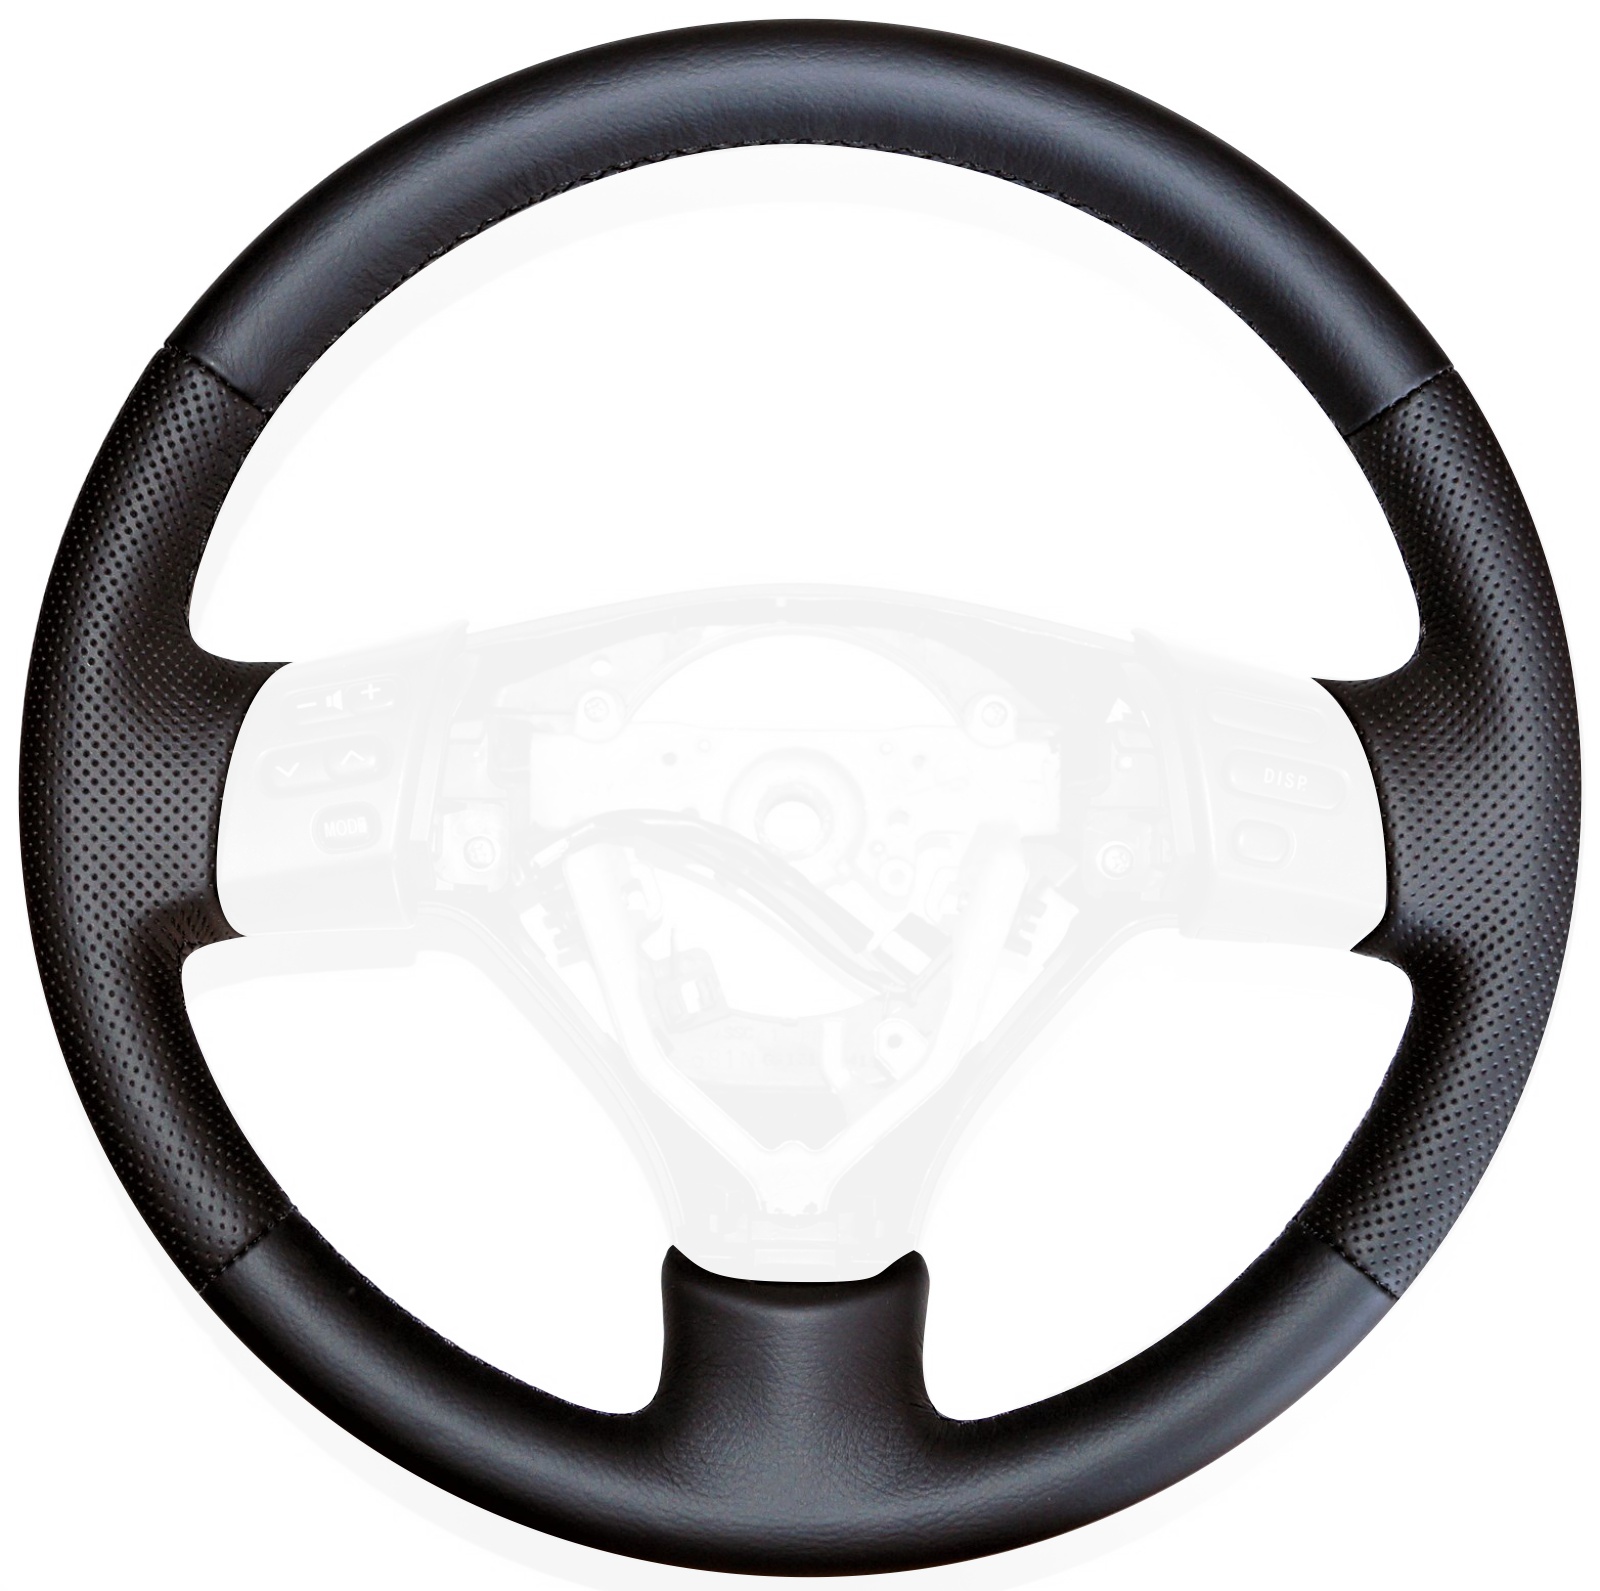 2001-06 Toyota Camry steering wheel cover - 3-spoke 2005-06